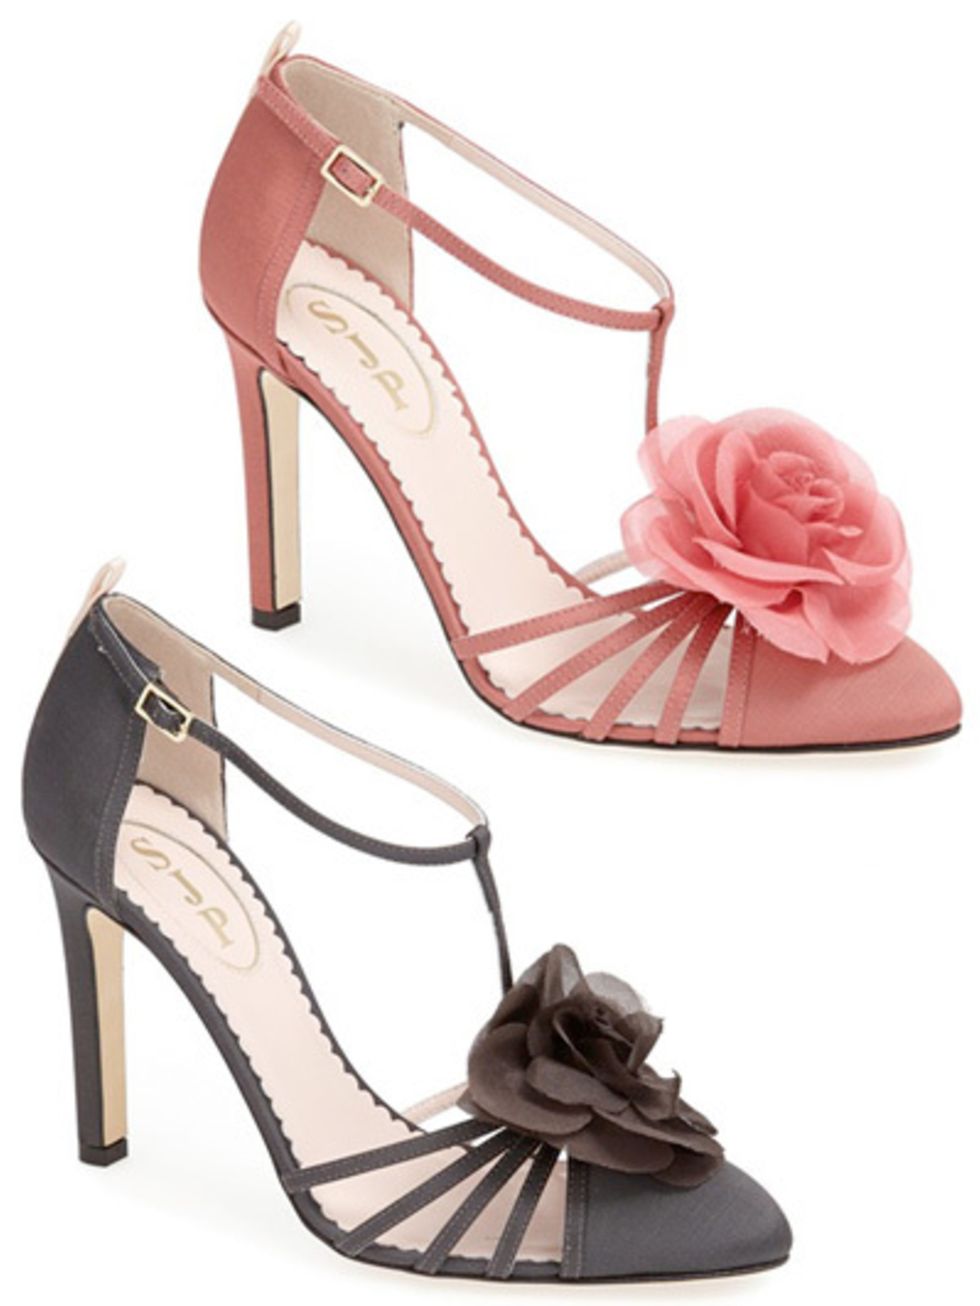 Footwear, High heels, Brown, Product, Sandal, Pink, Basic pump, Tan, Fashion, Beauty, 